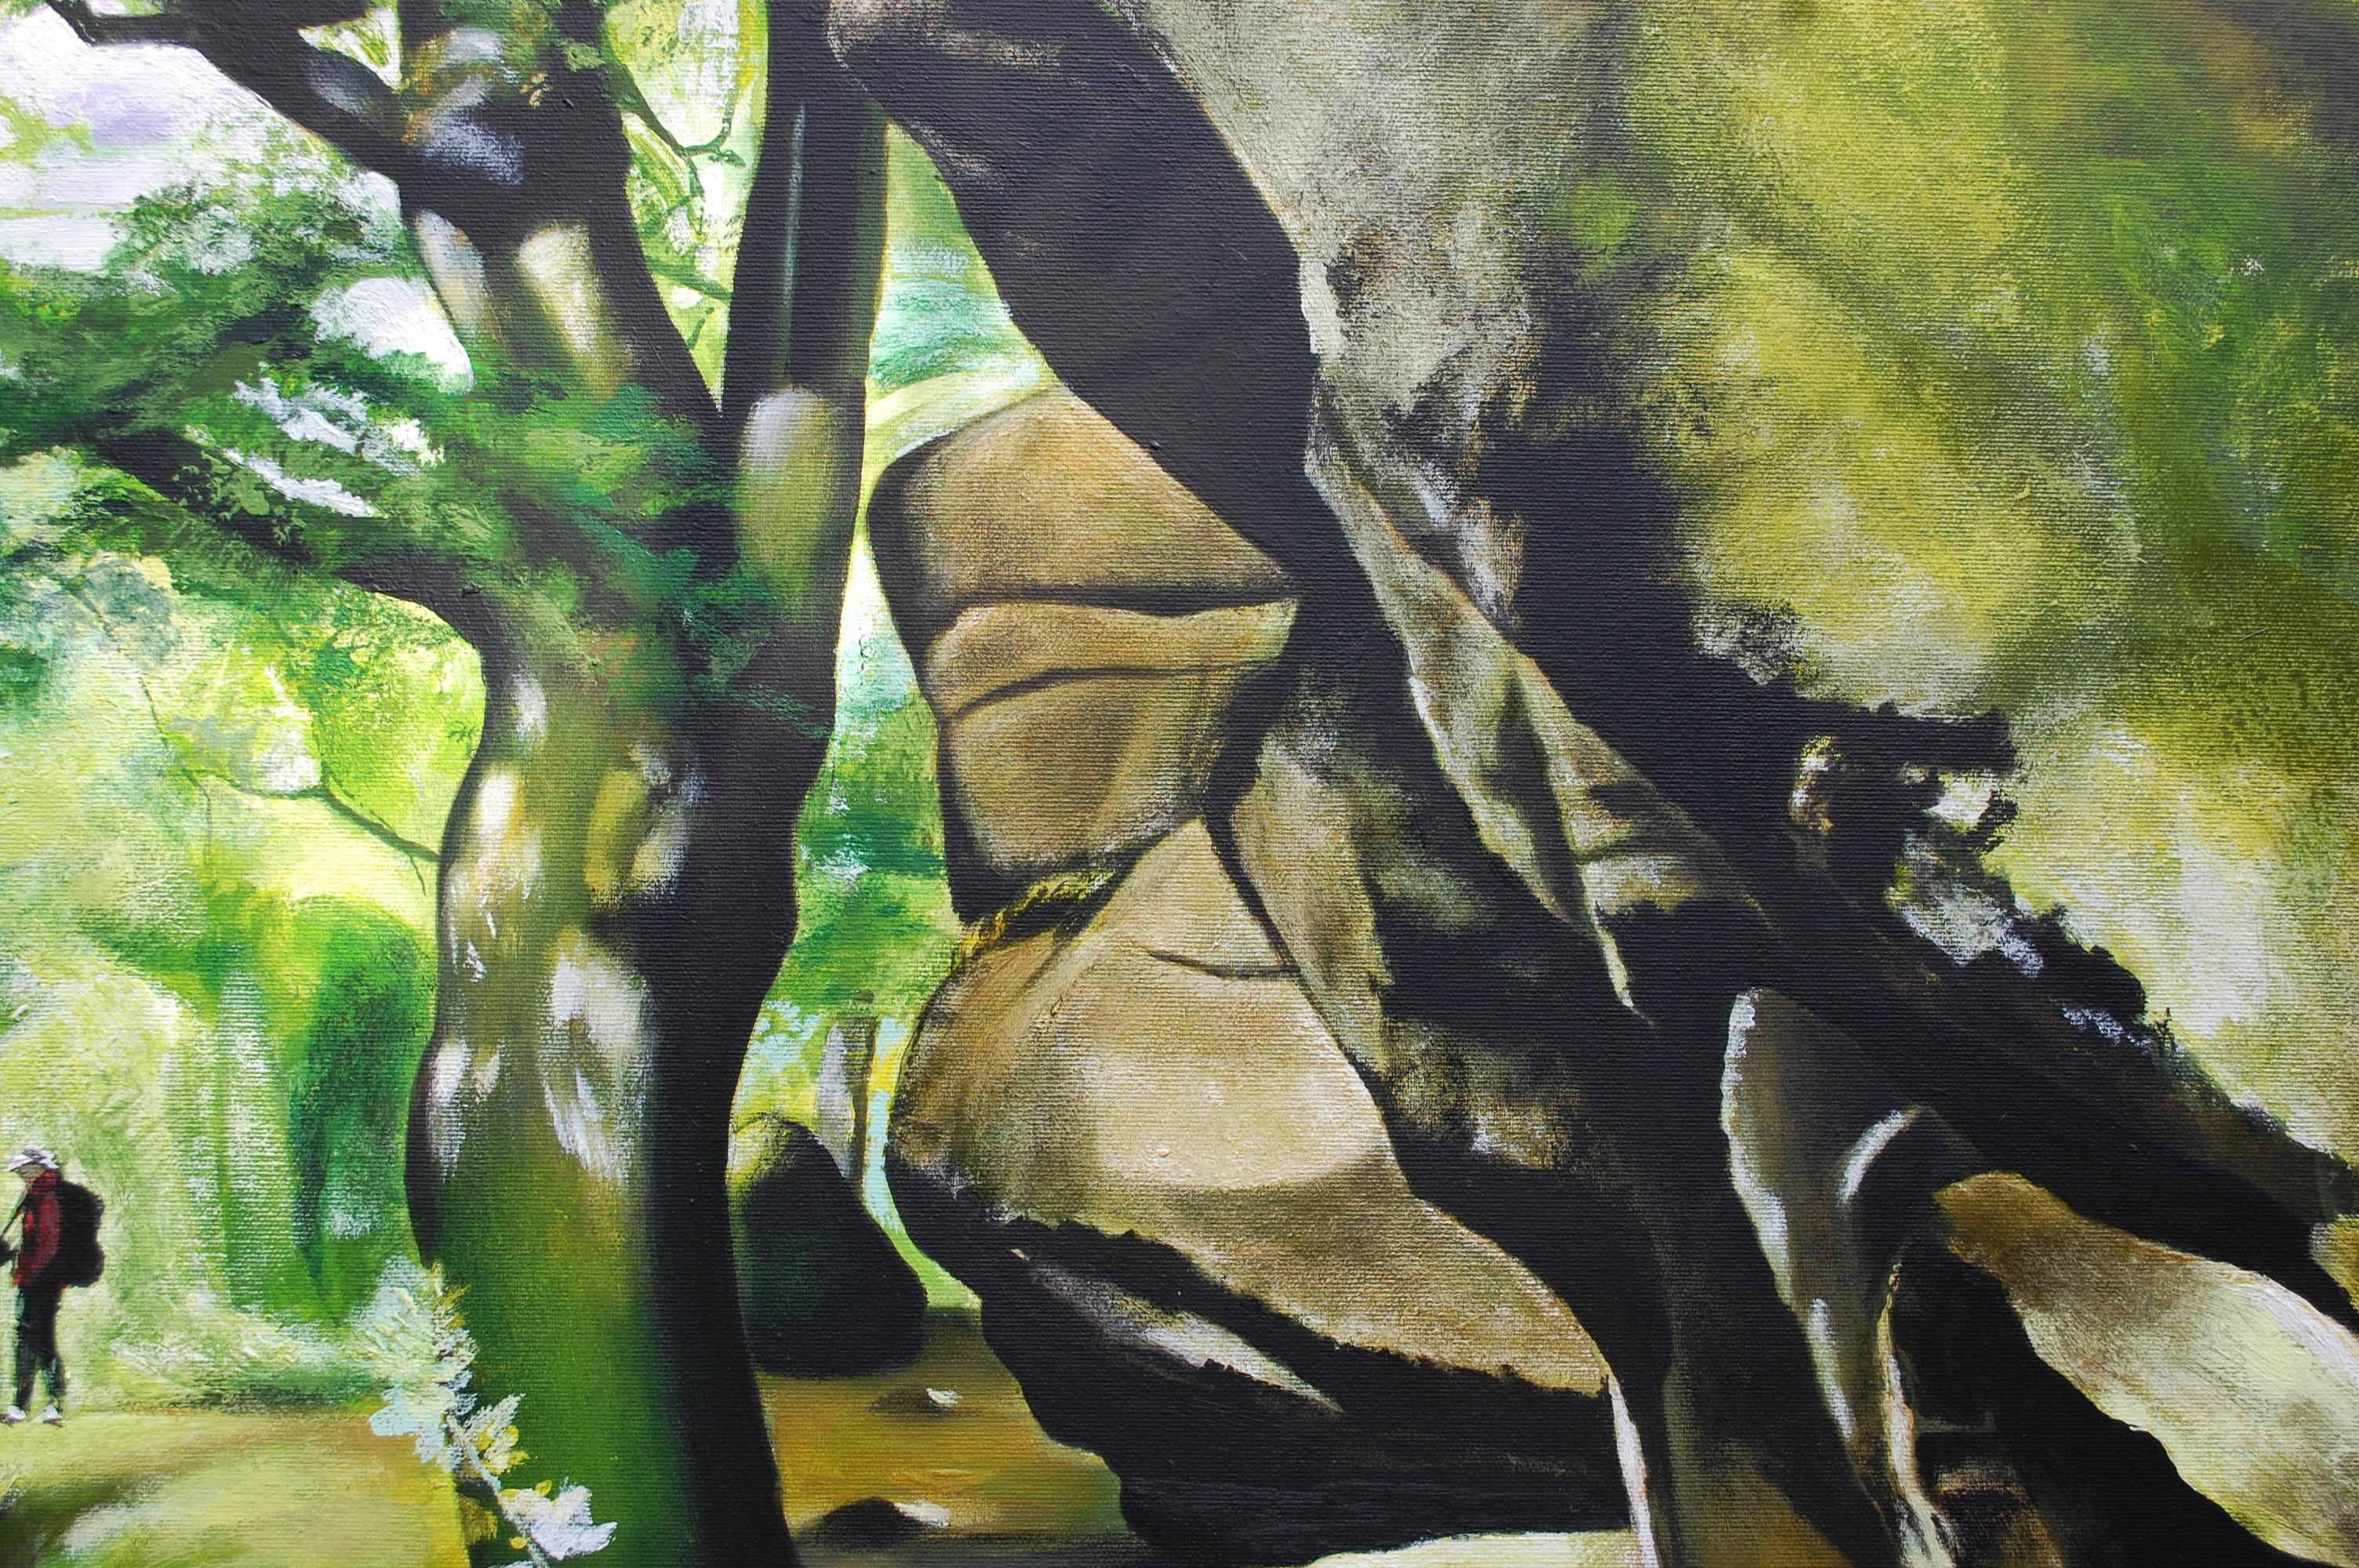 Rocks - Peinture figurative contemporaine de nature, grand format  en vente 8